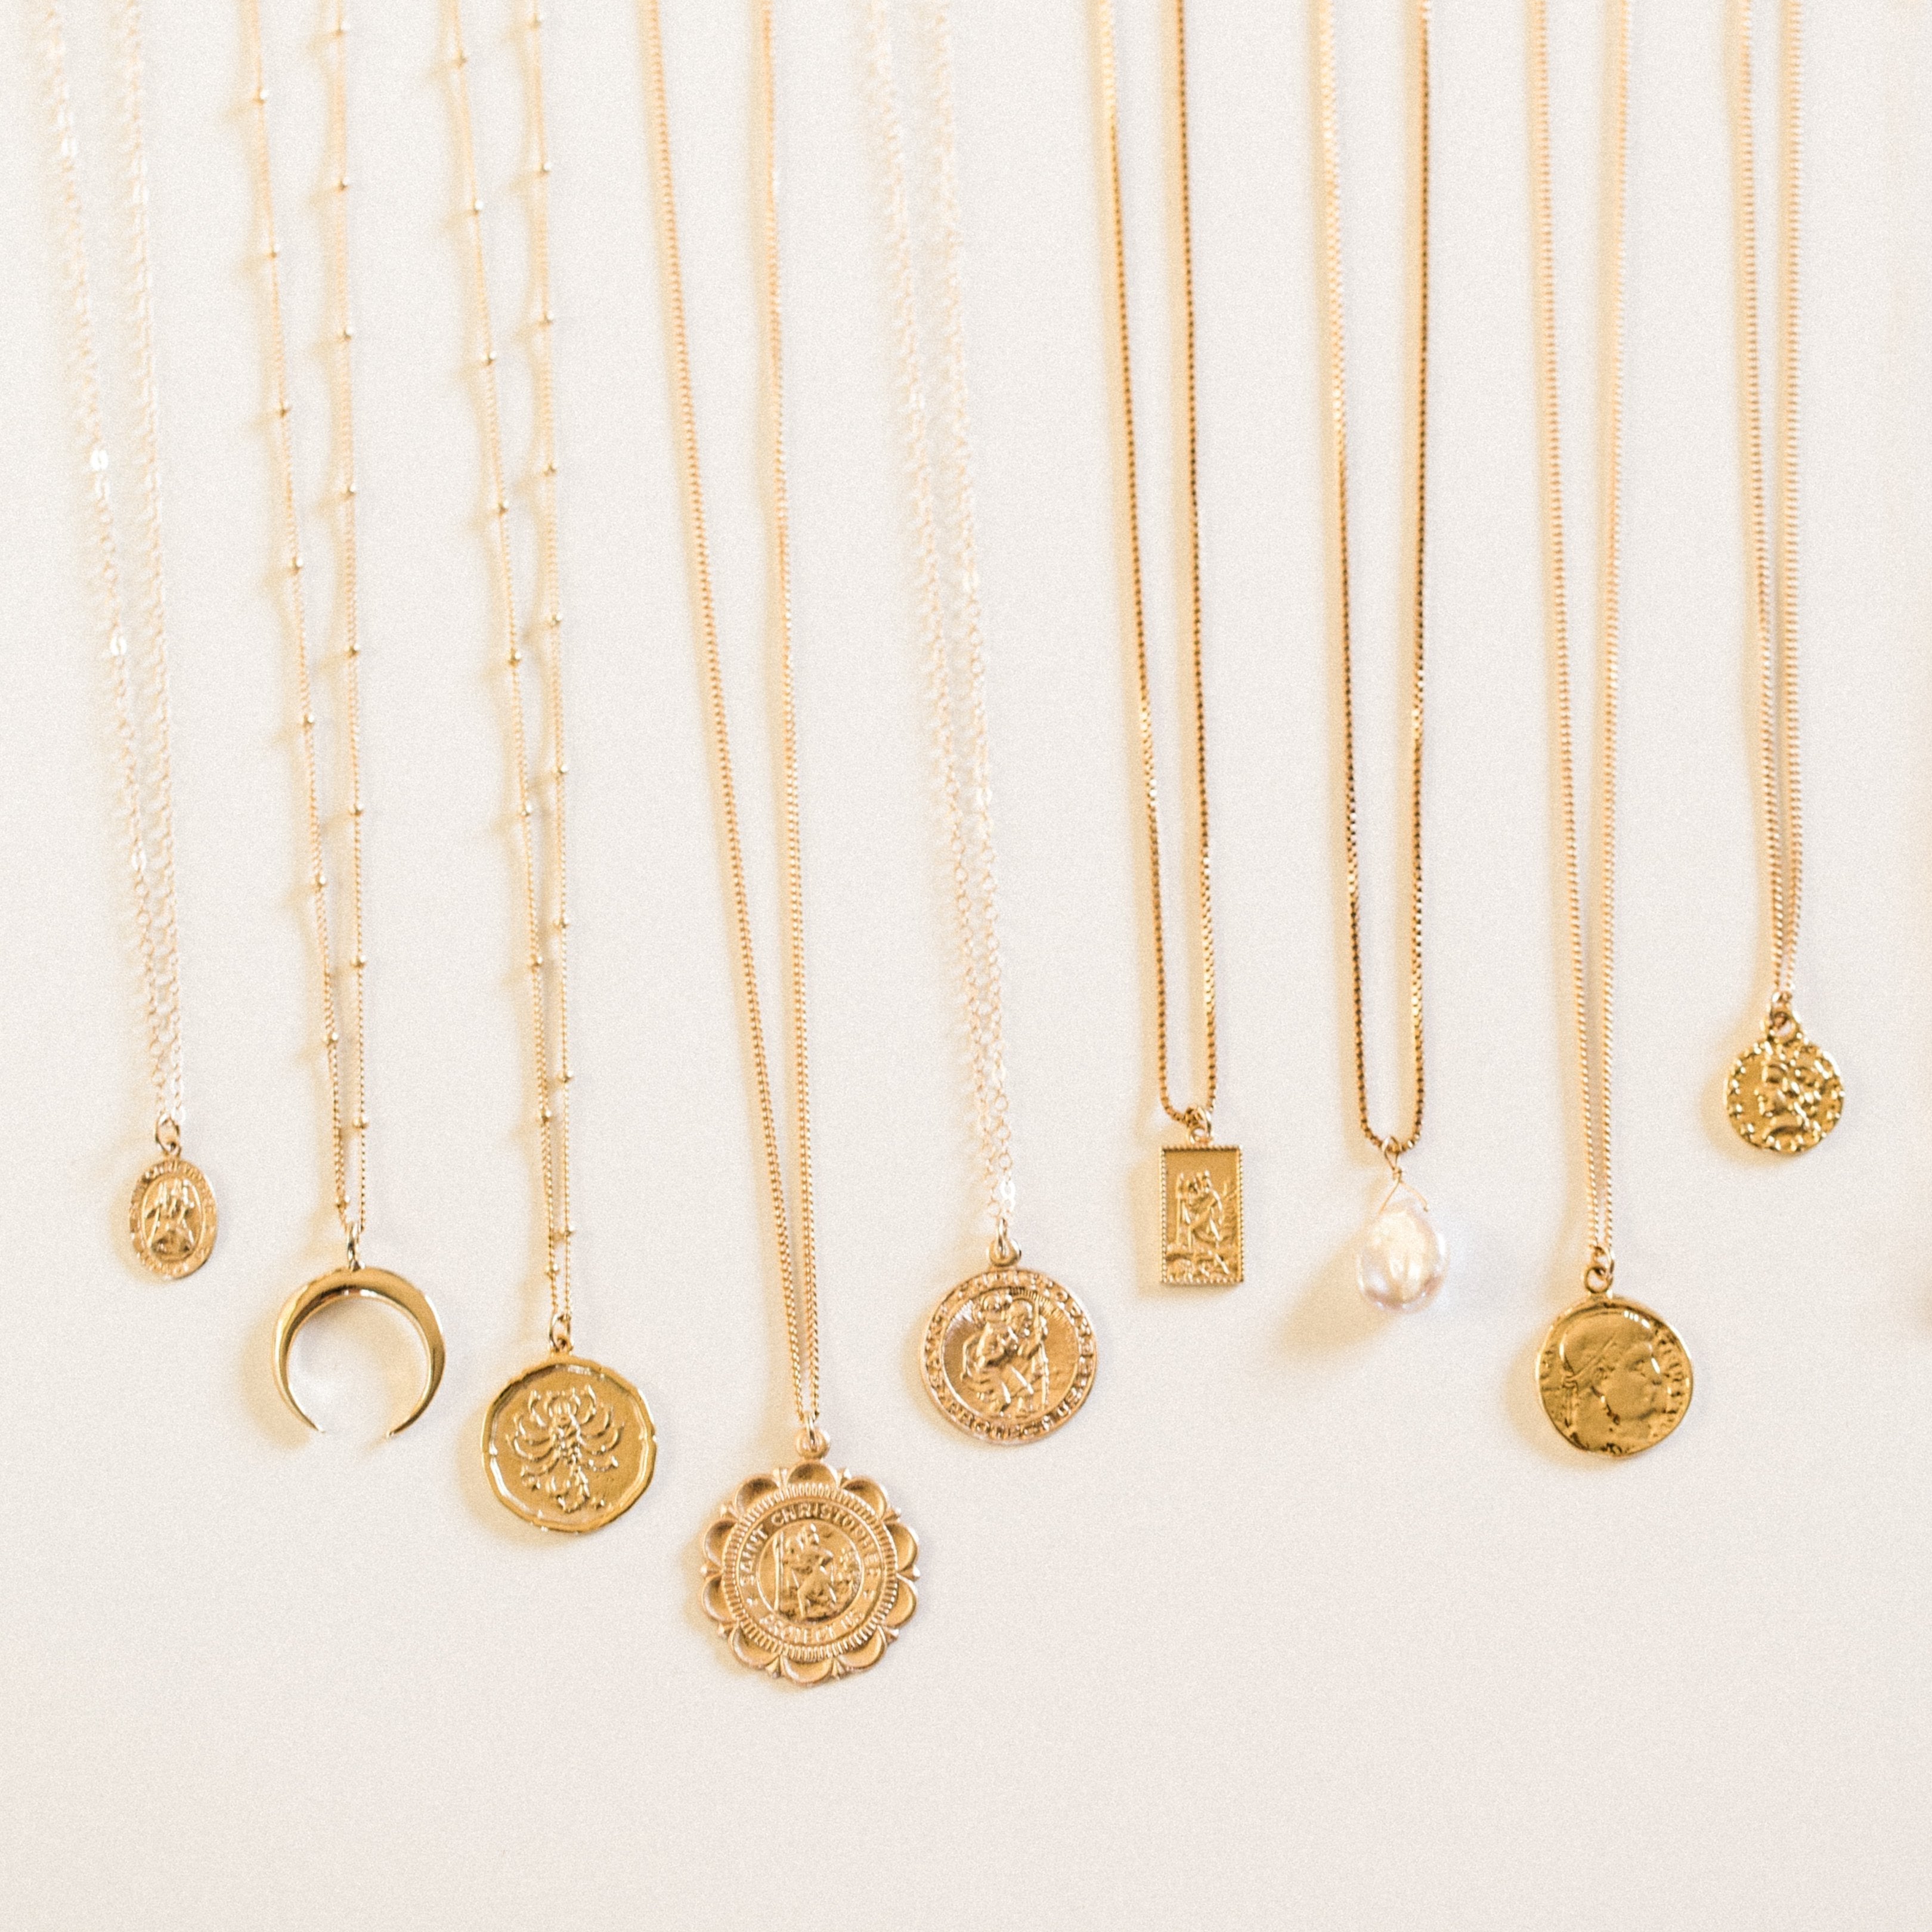 14K Gold Filled Hoops 15mm 45mm Women Circle Earrings  Etsy  Small gold  hoop earrings Etsy earrings Jewelry